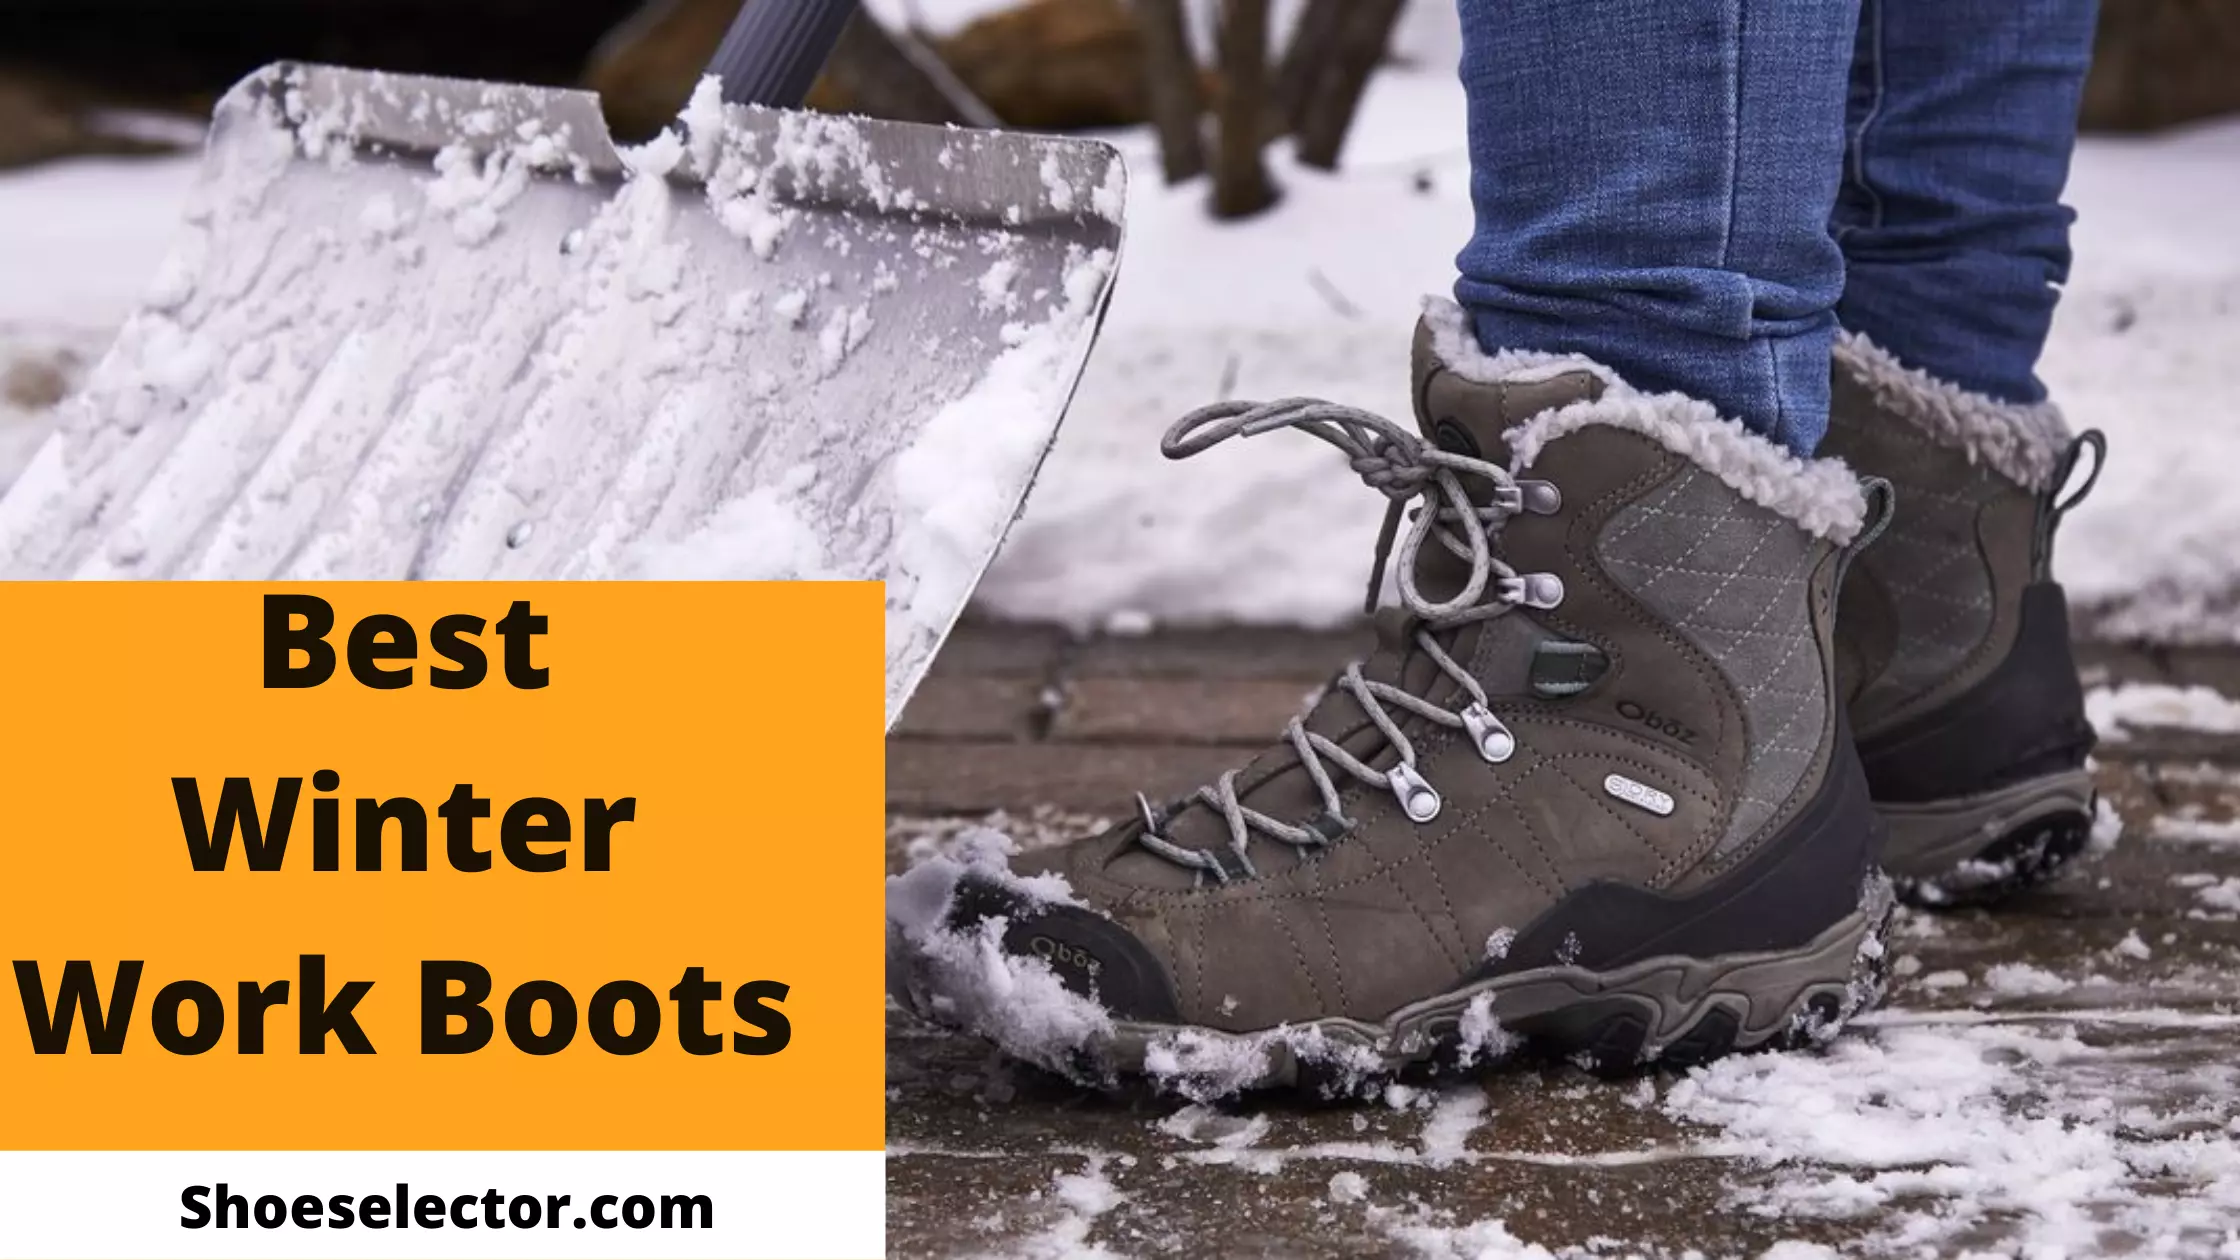 Best Winter Work Boots - Comfortable, Insulated & Waterproof